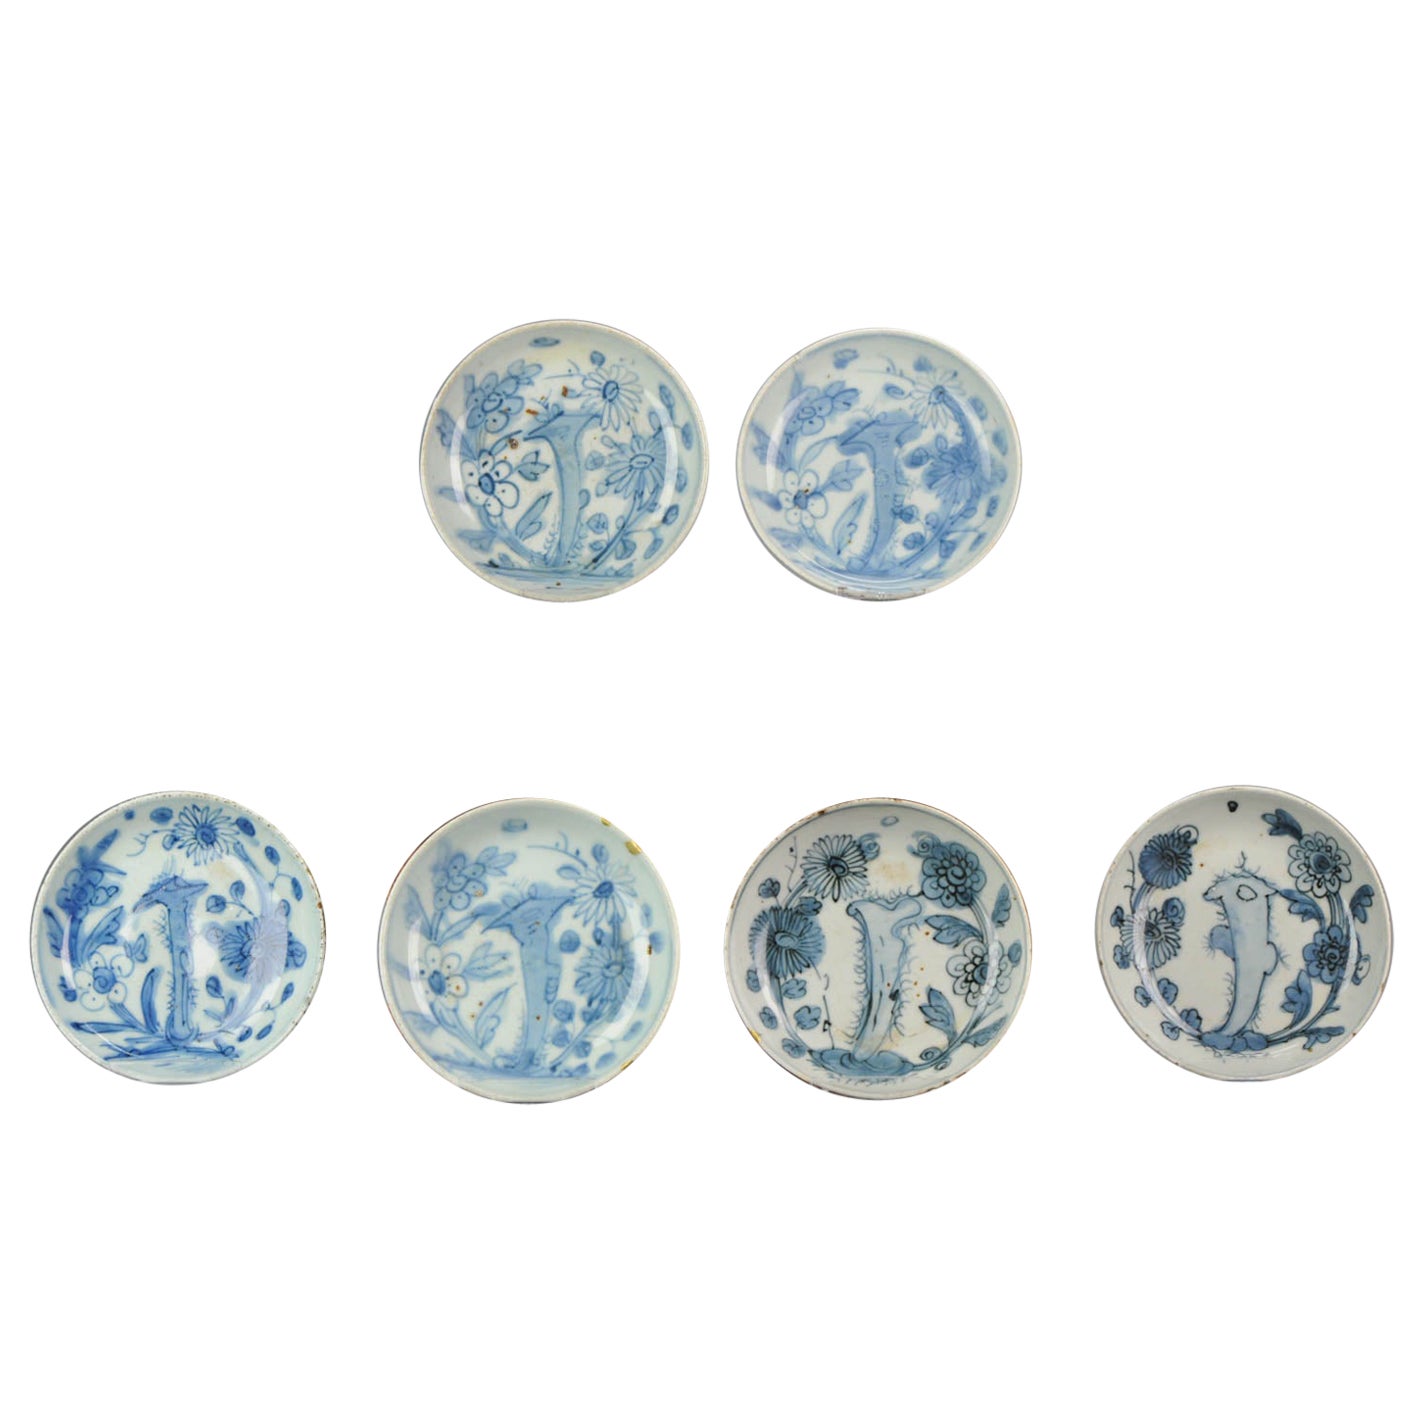 Antique Chinese Porcelain Ming Period Porcelain Jiajing or Wanli, 16th Century